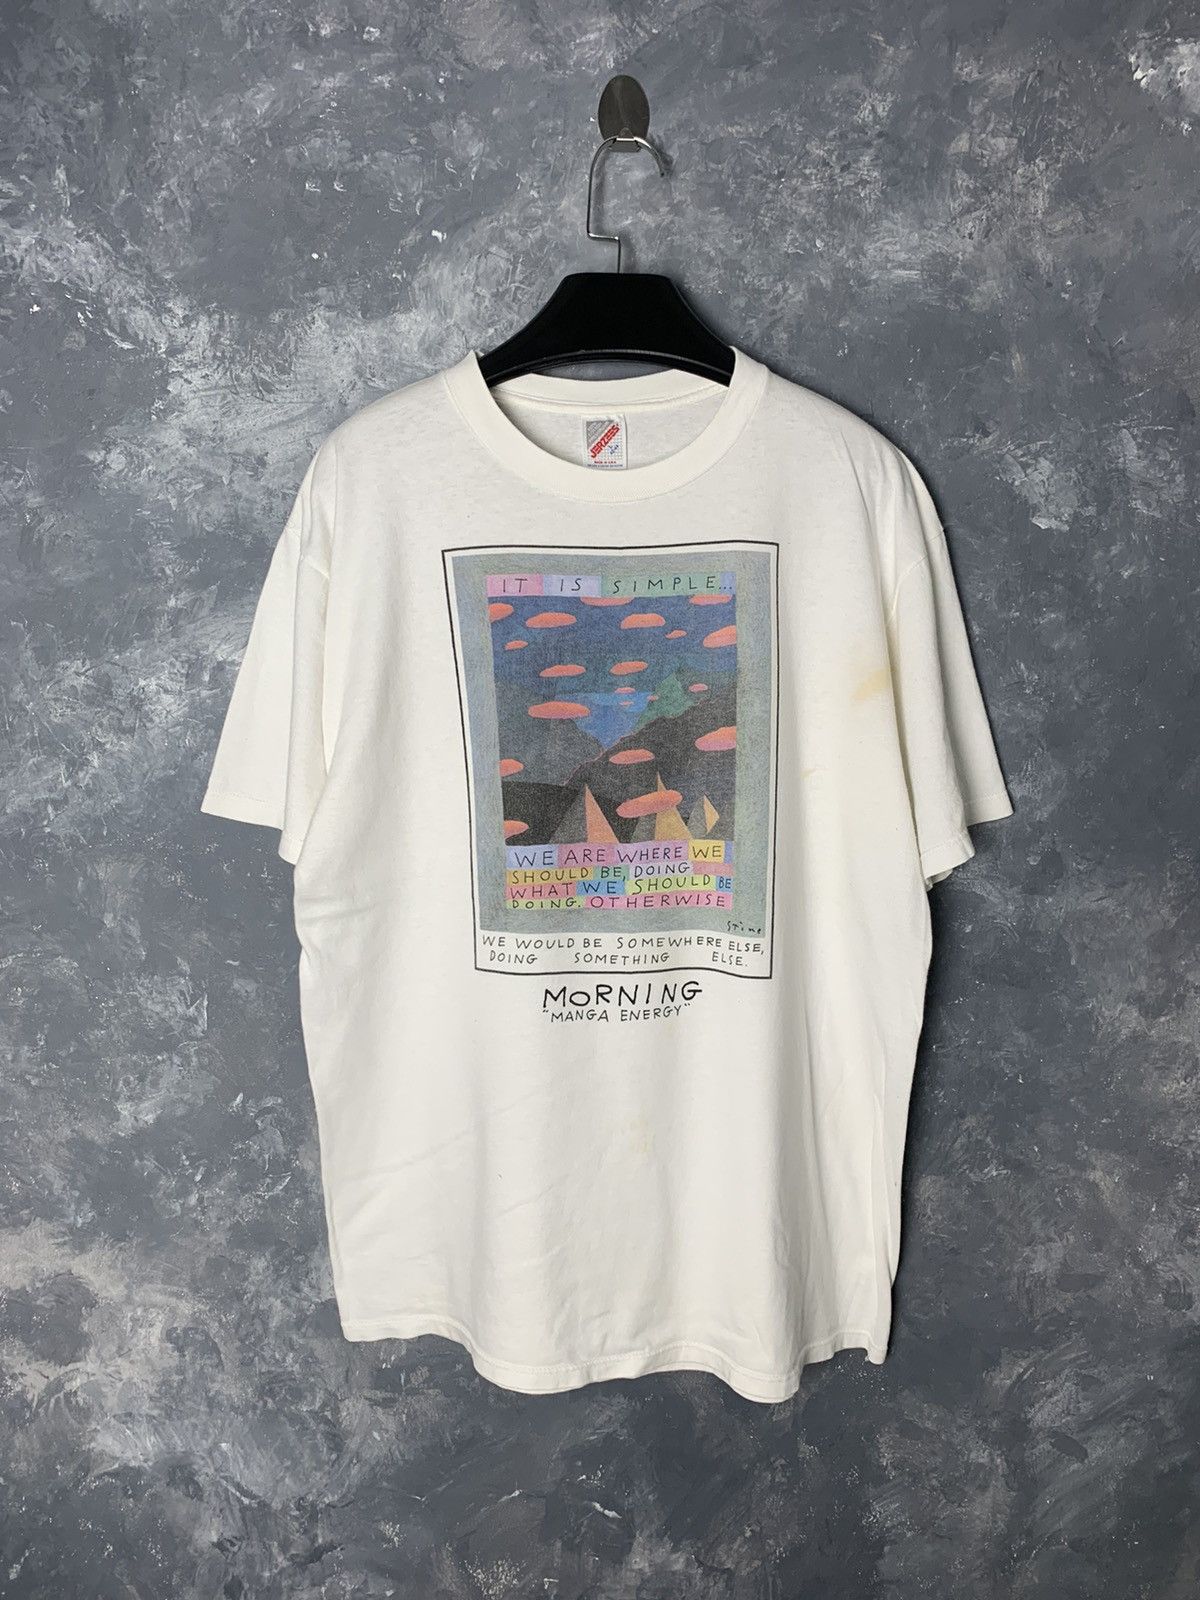 Richard Stine art t-shirt 90's vintage-